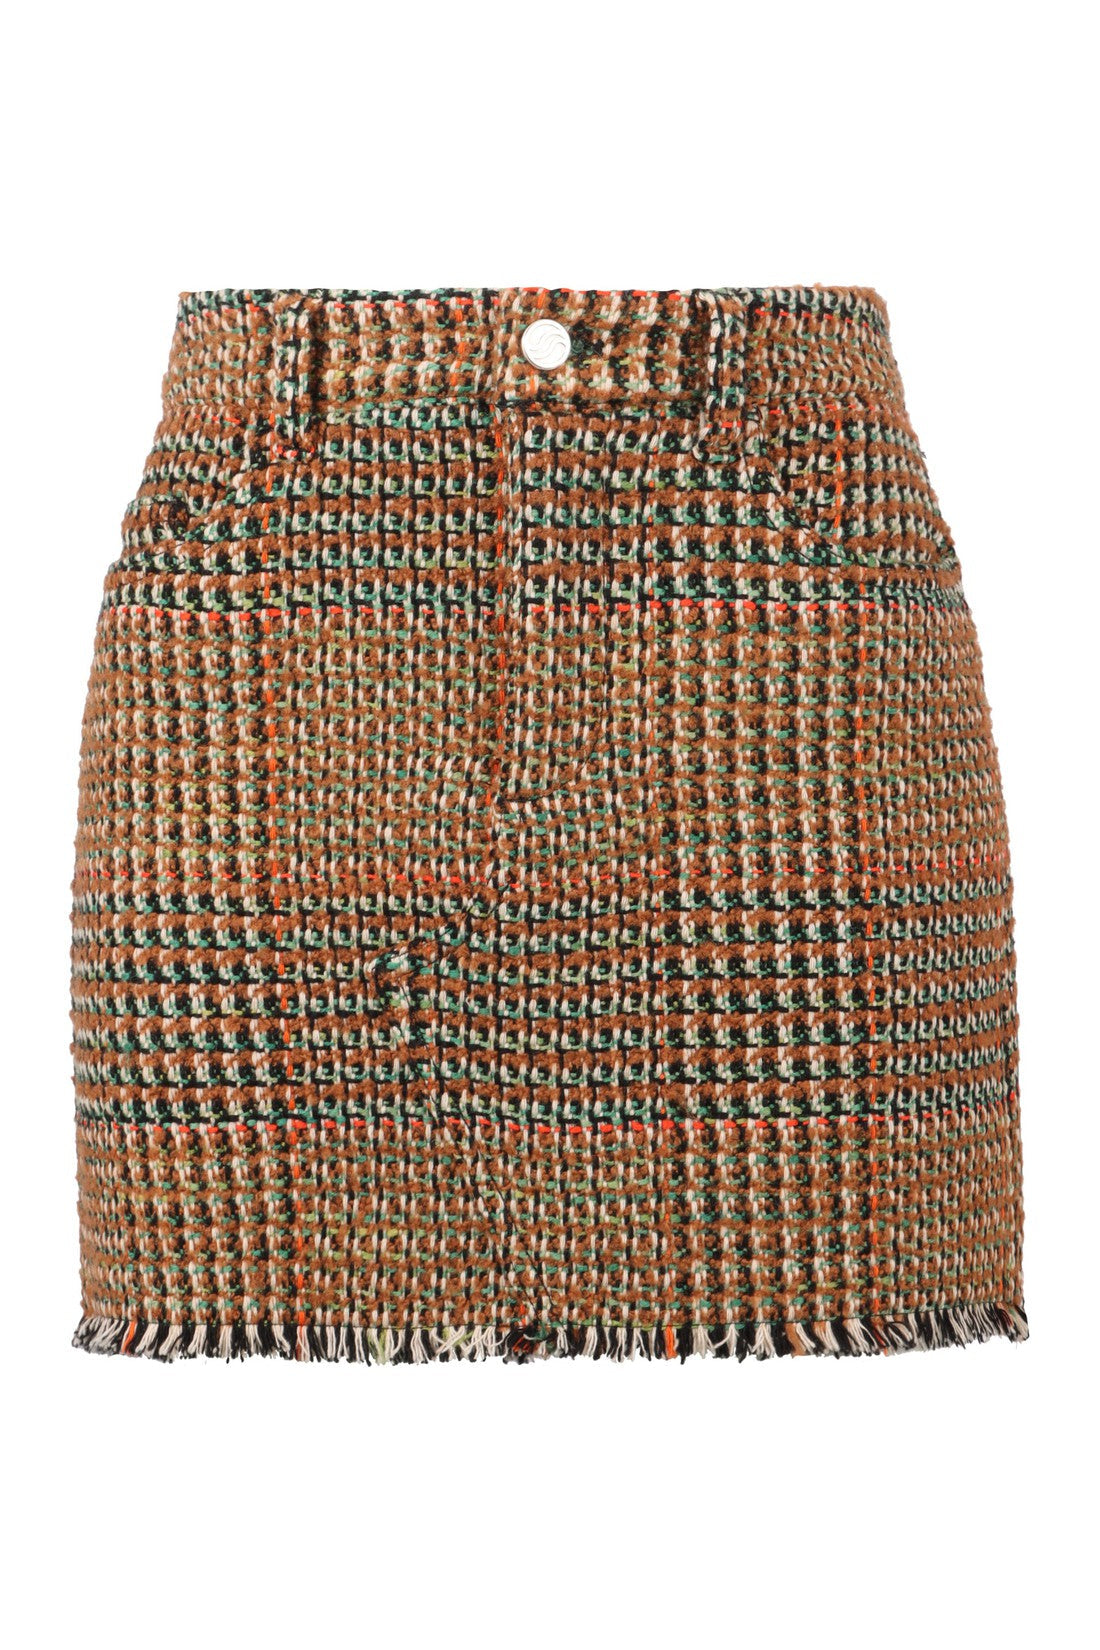 Stella McCartney-OUTLET-SALE-Wool mini skirt-ARCHIVIST